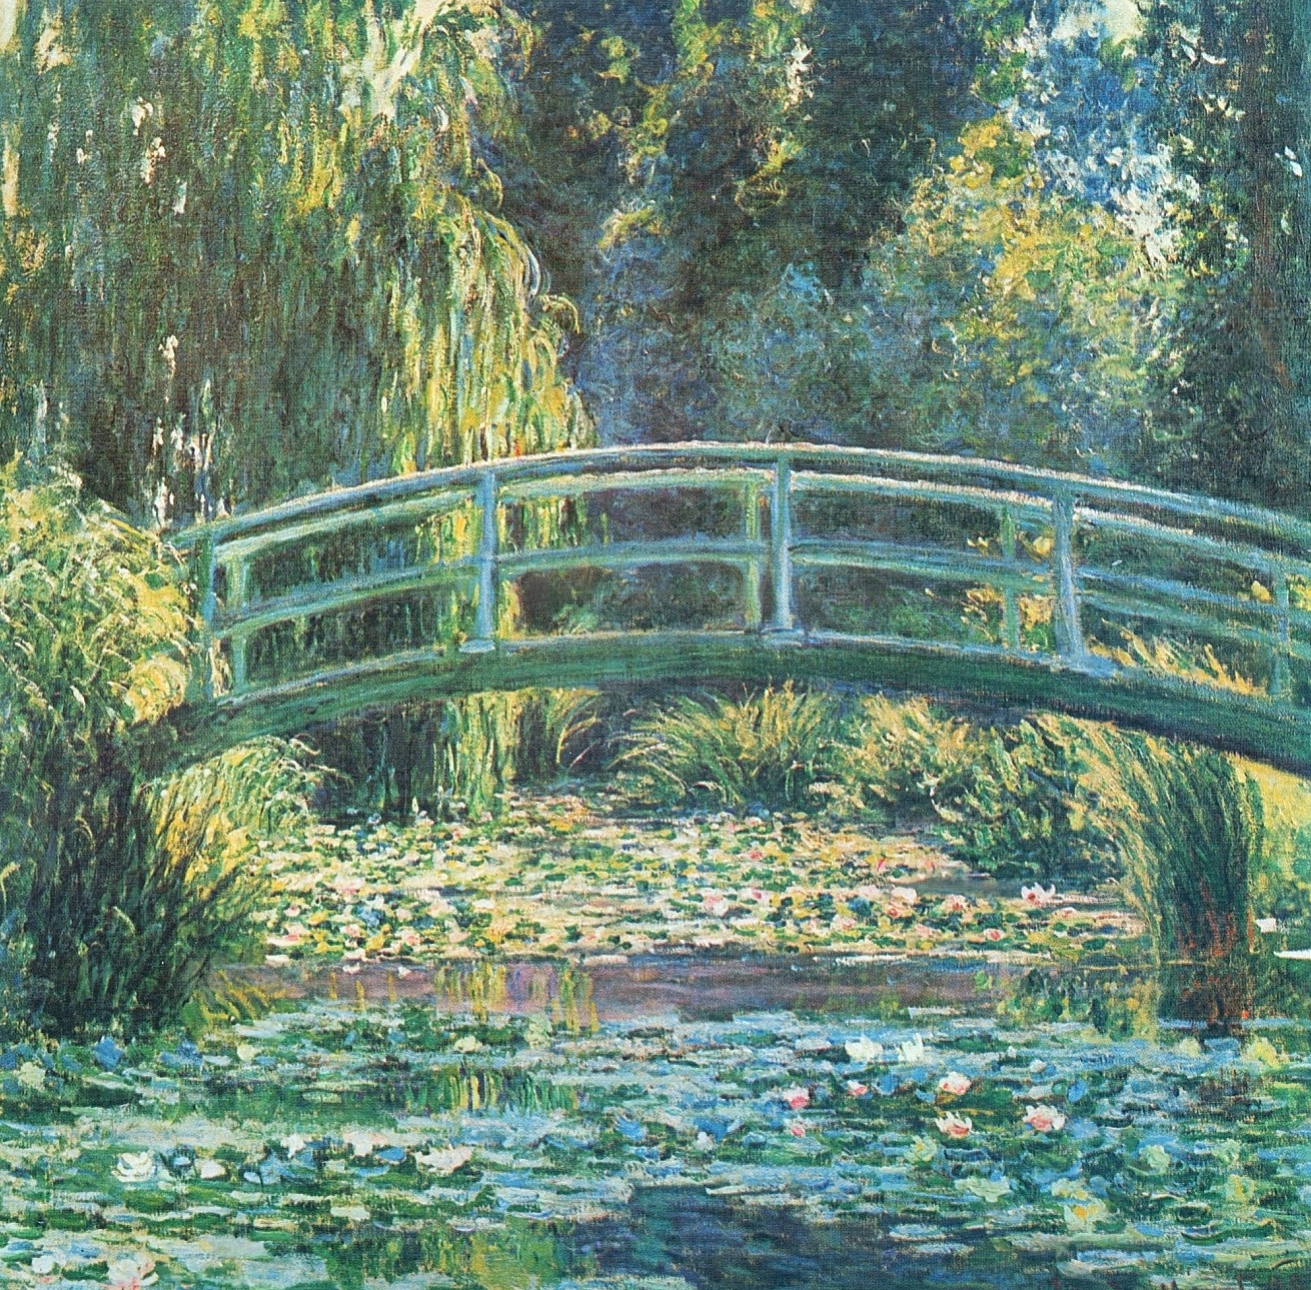 Claude+Monet-1840-1926 (403).jpg